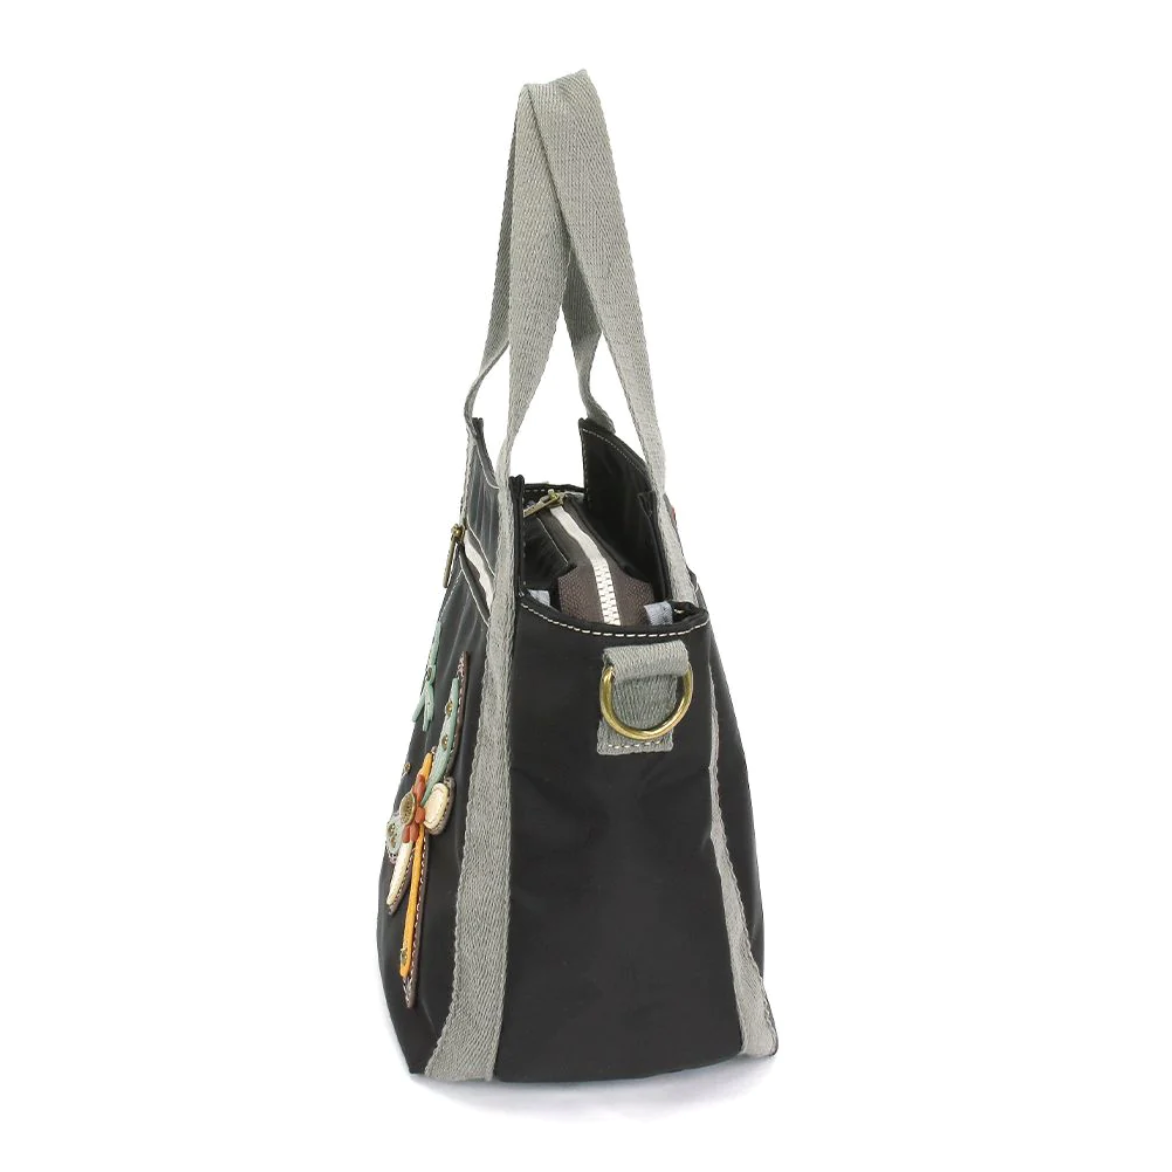 Chala Dragonfly Venture Mini Carryall Handbag